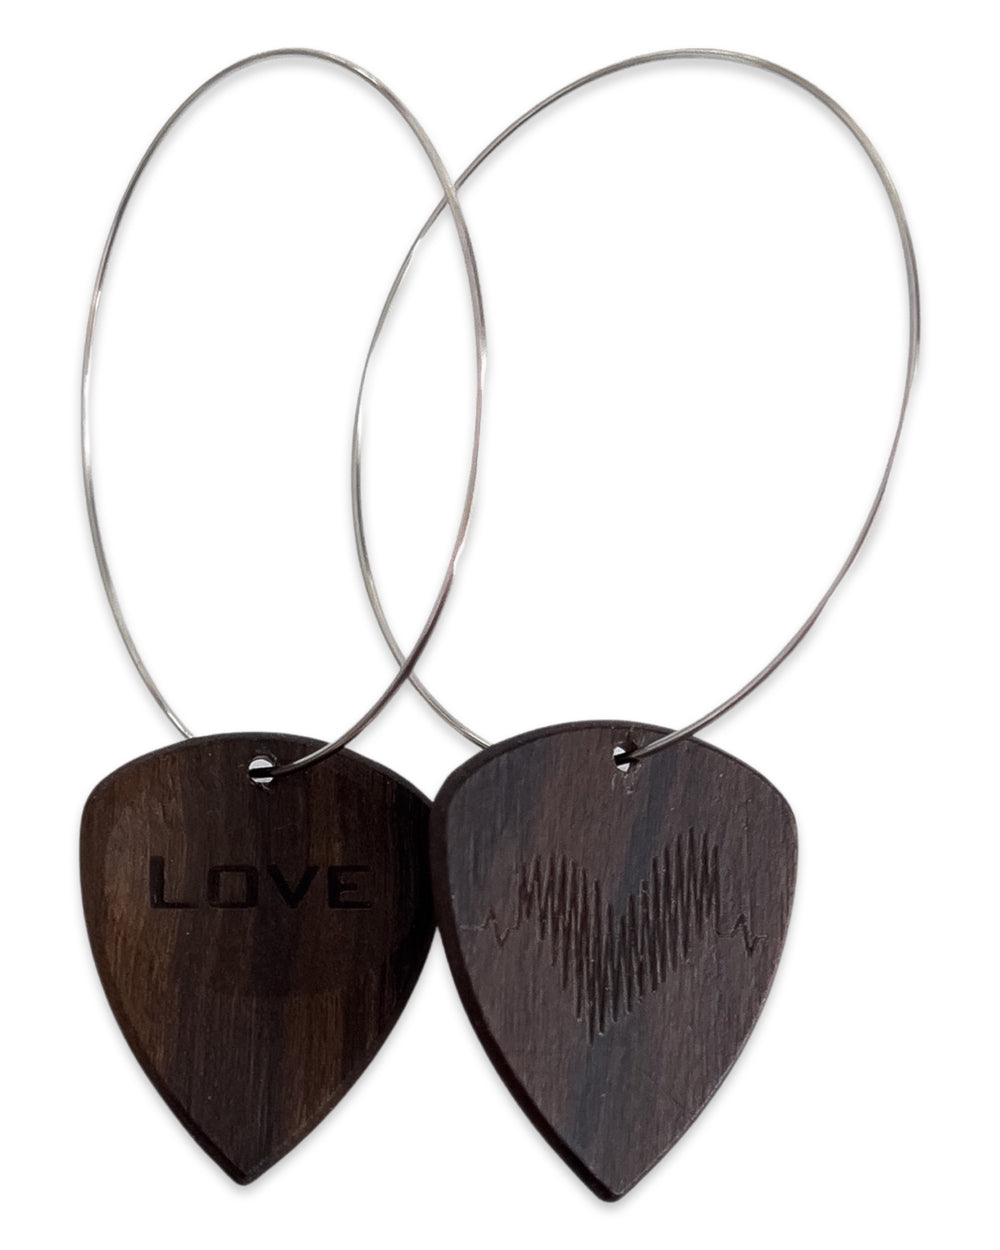 WS Groupie Love Chacate Preto Wood Reversible Single Guitar Pick Earrings